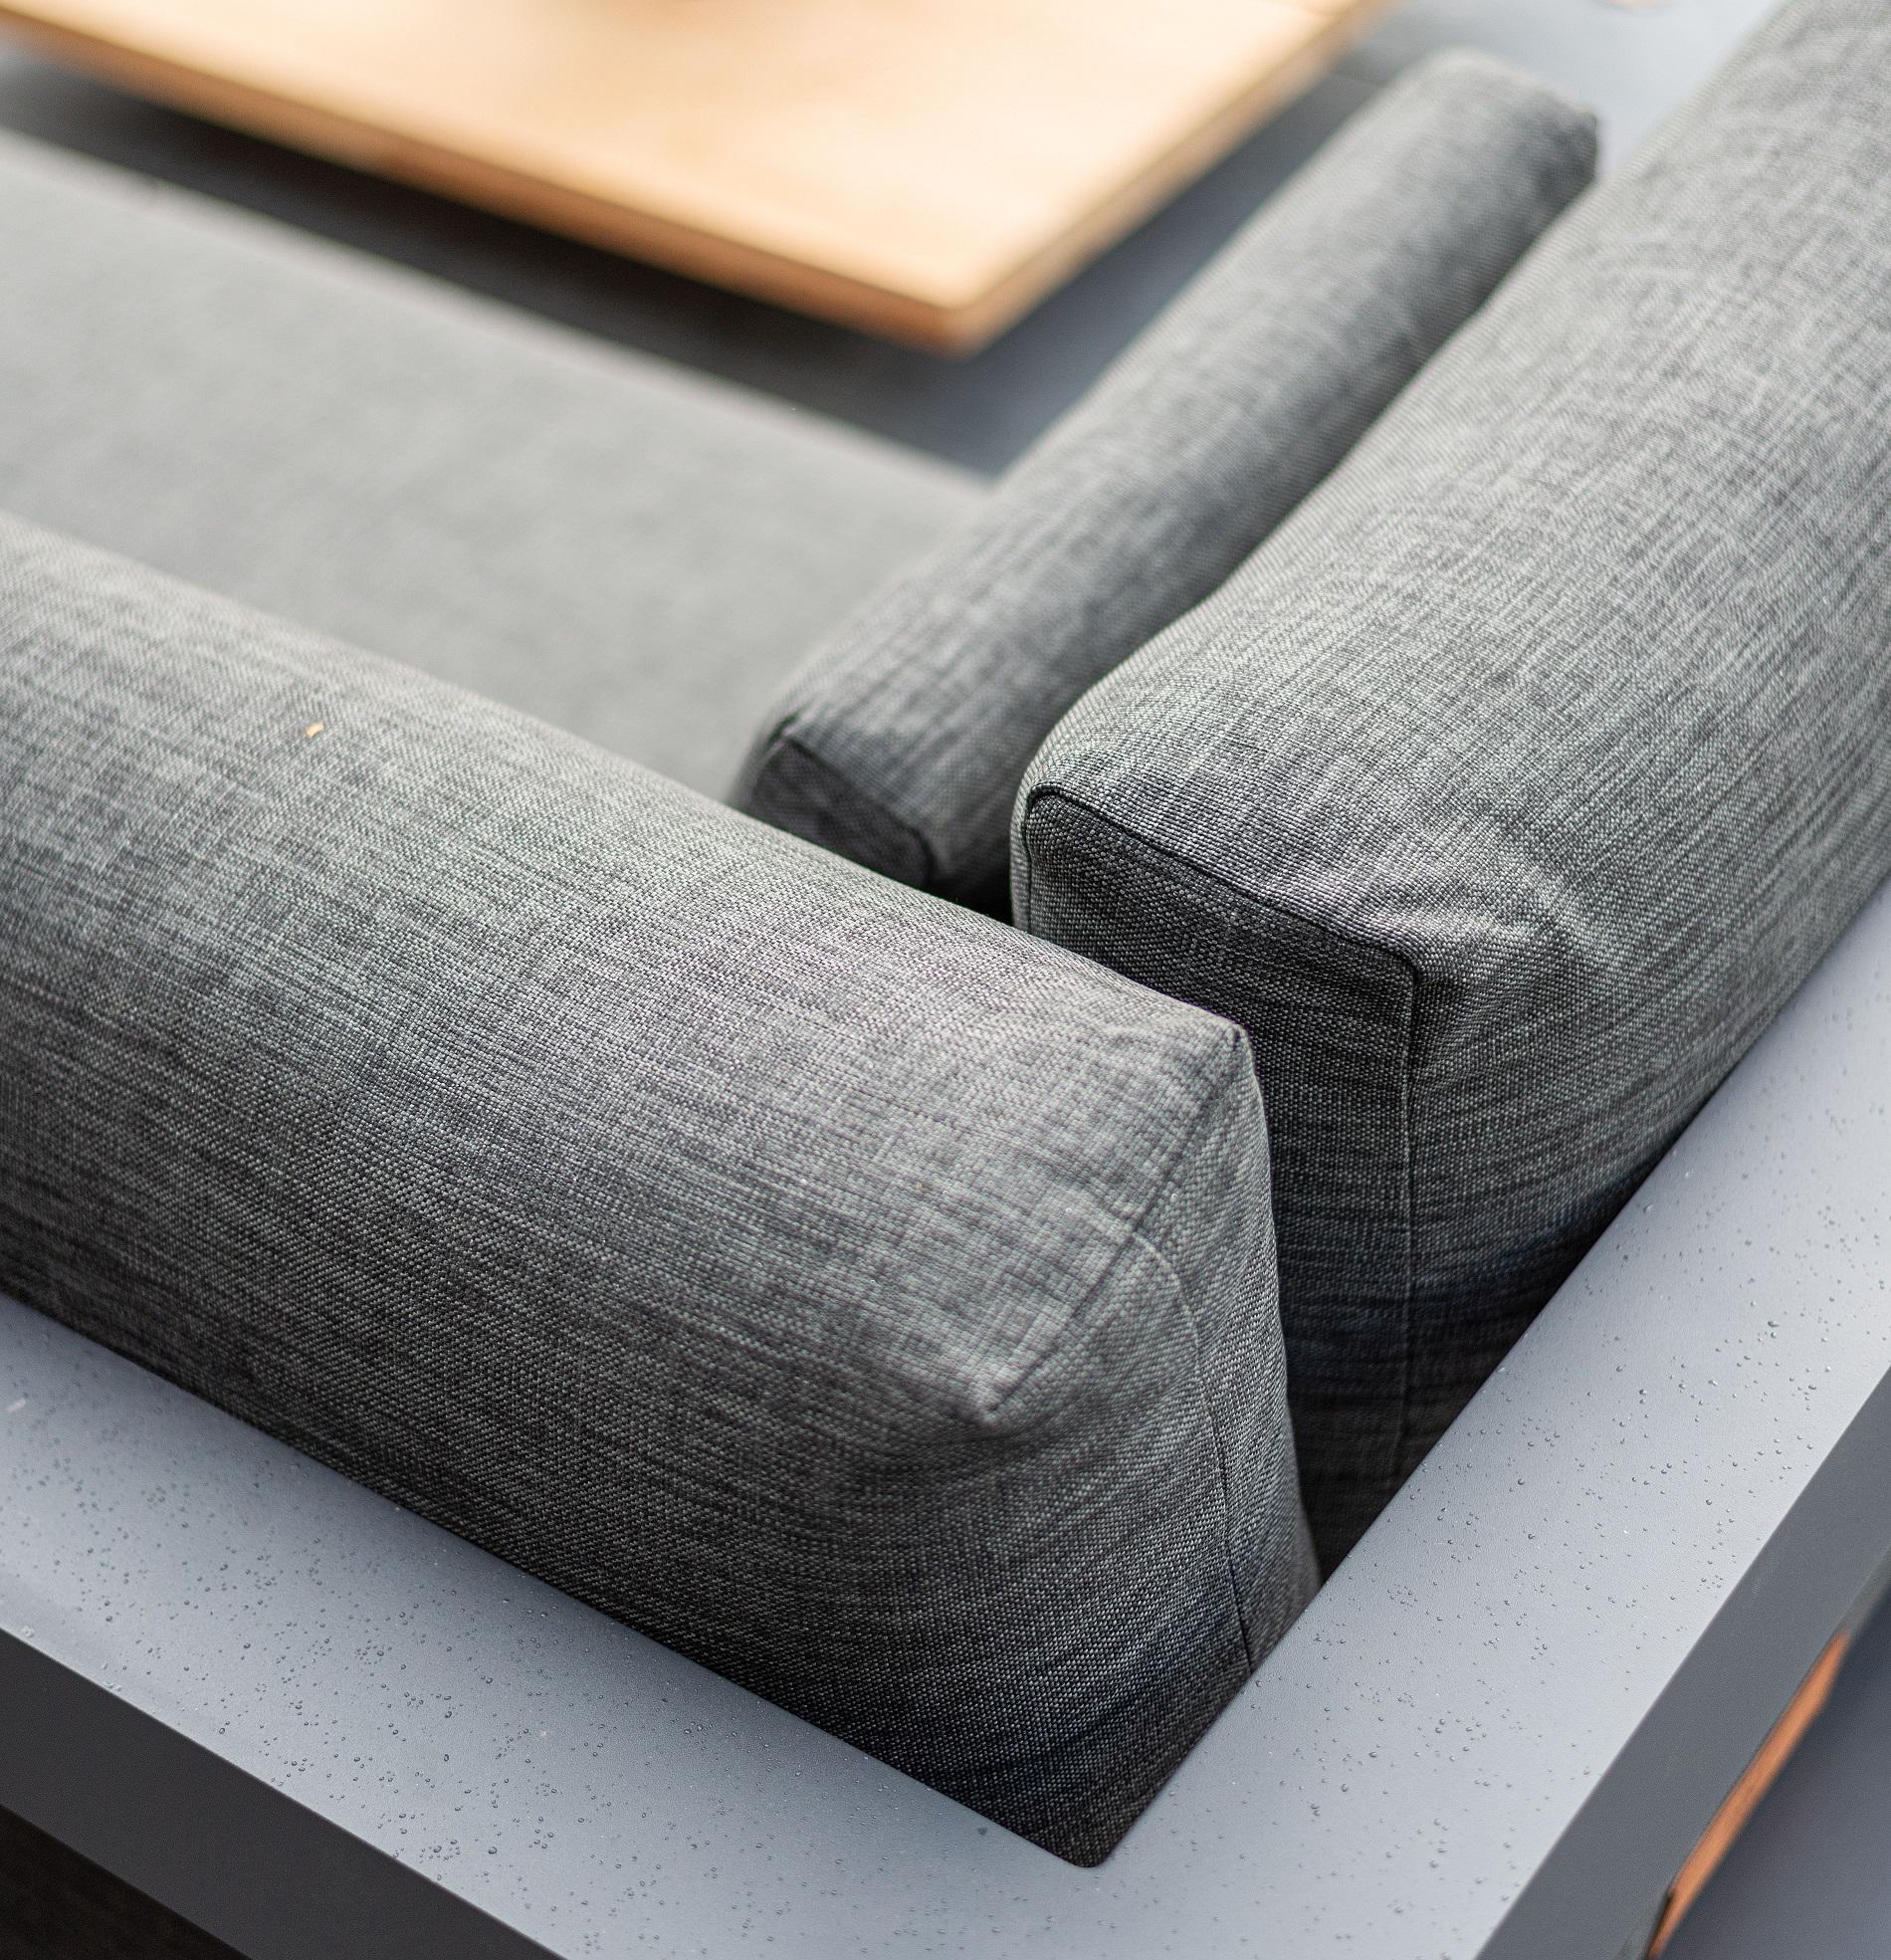 aluminium lounge furniture in grey aluminium detail corner and cushions